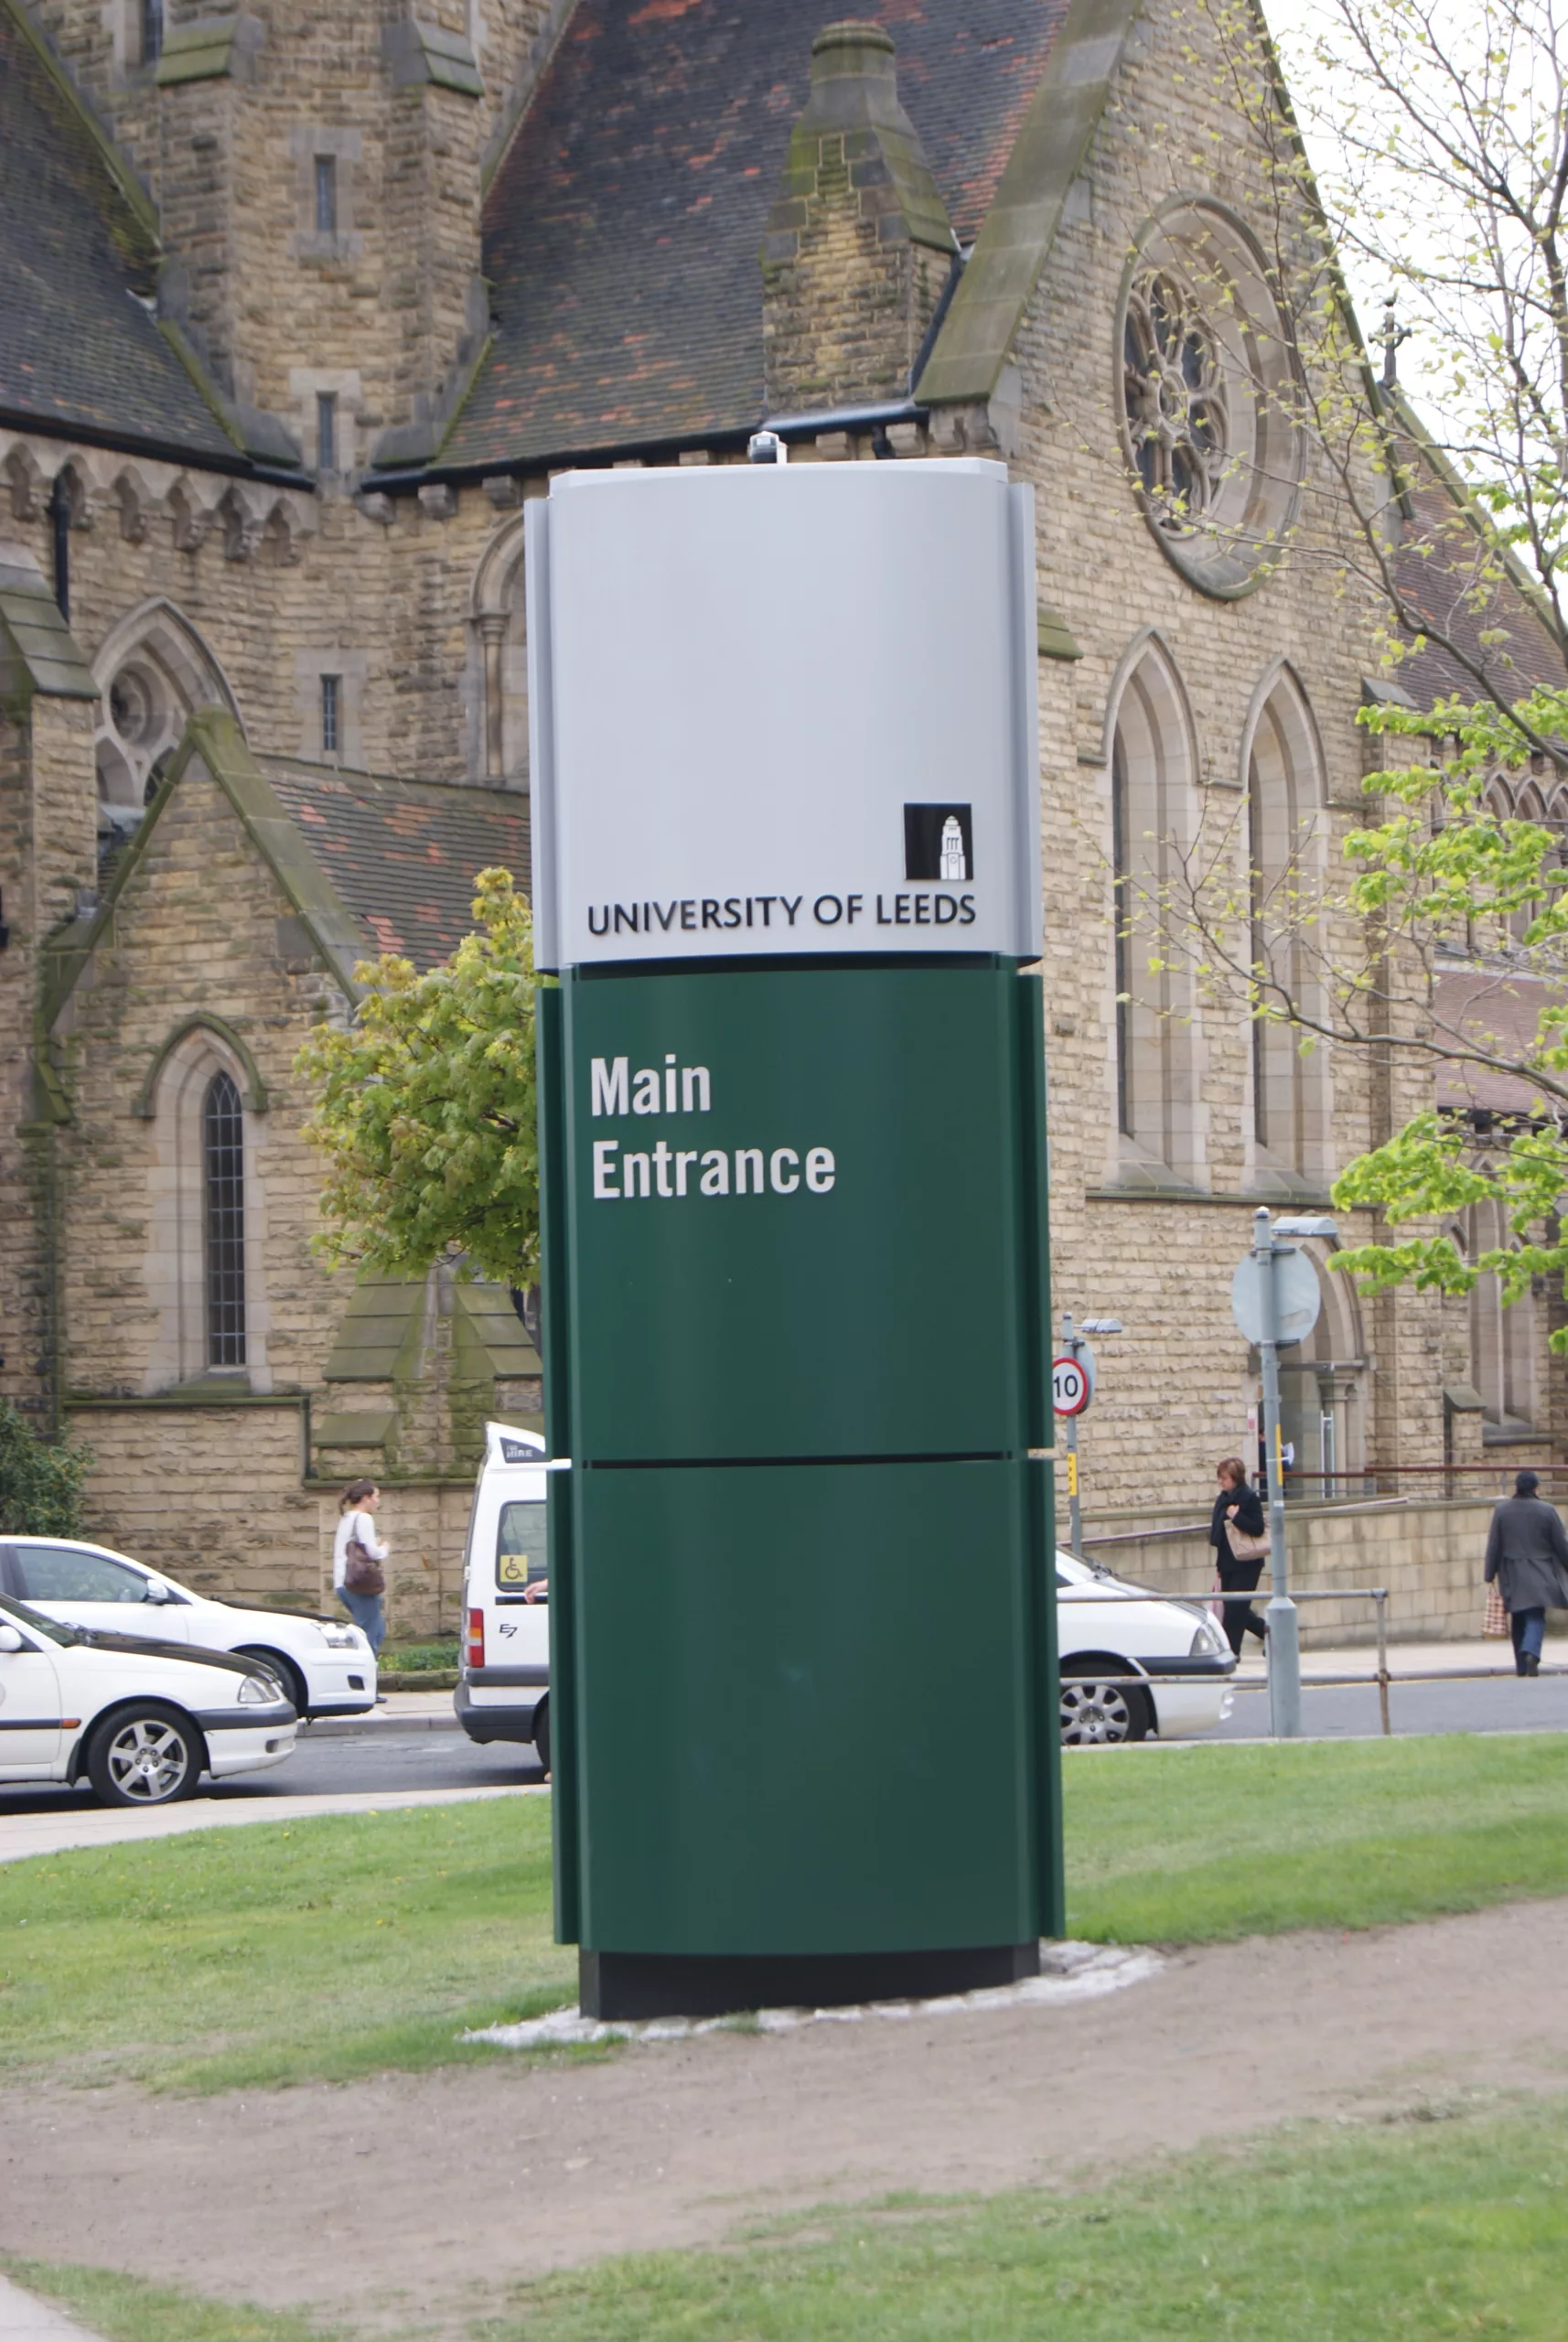 University of Leeds International Excellence Scholarships